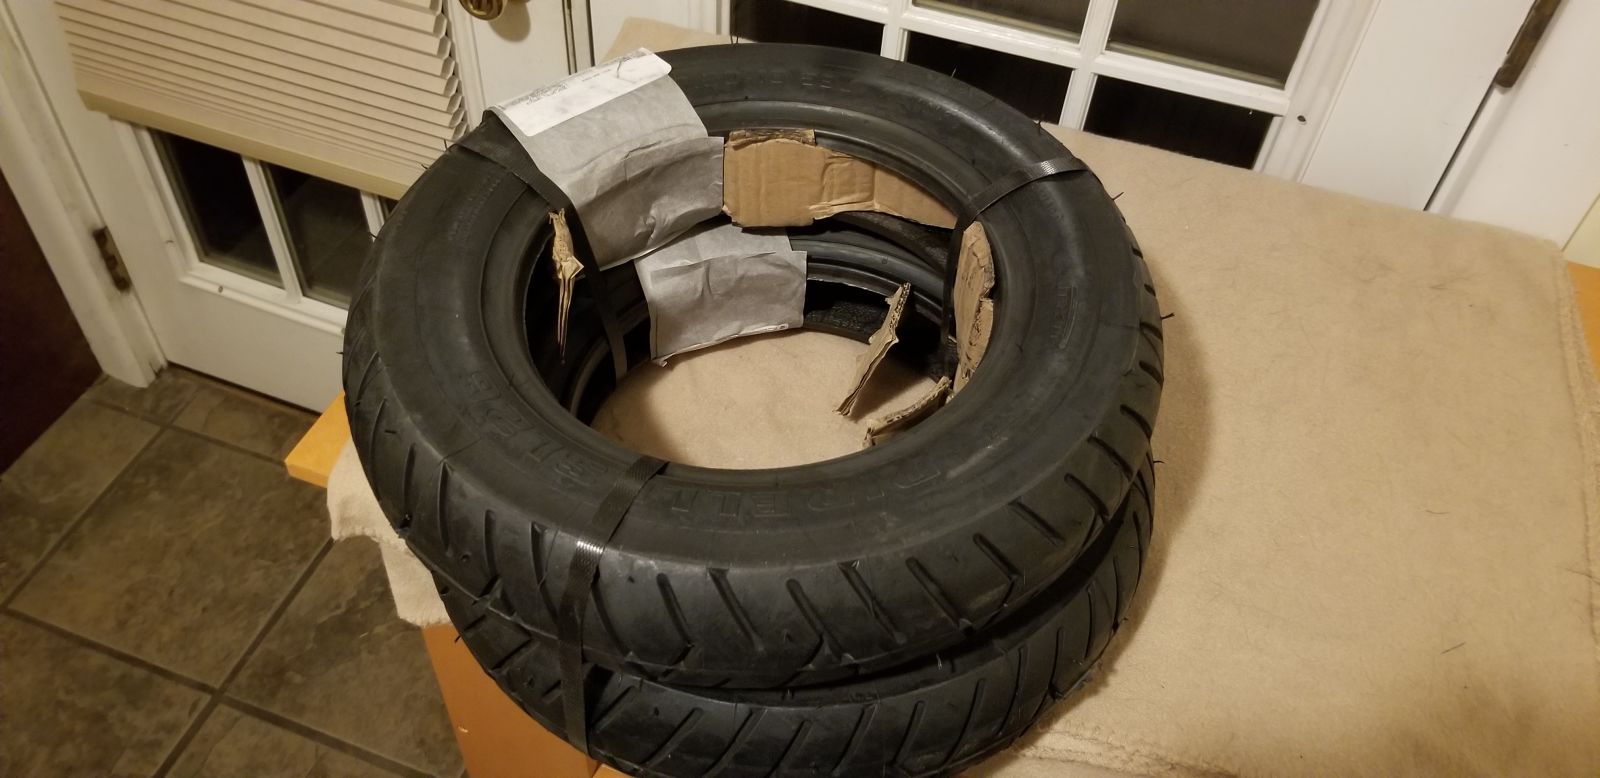 A set of fresh Pirelli tires set me back about $95